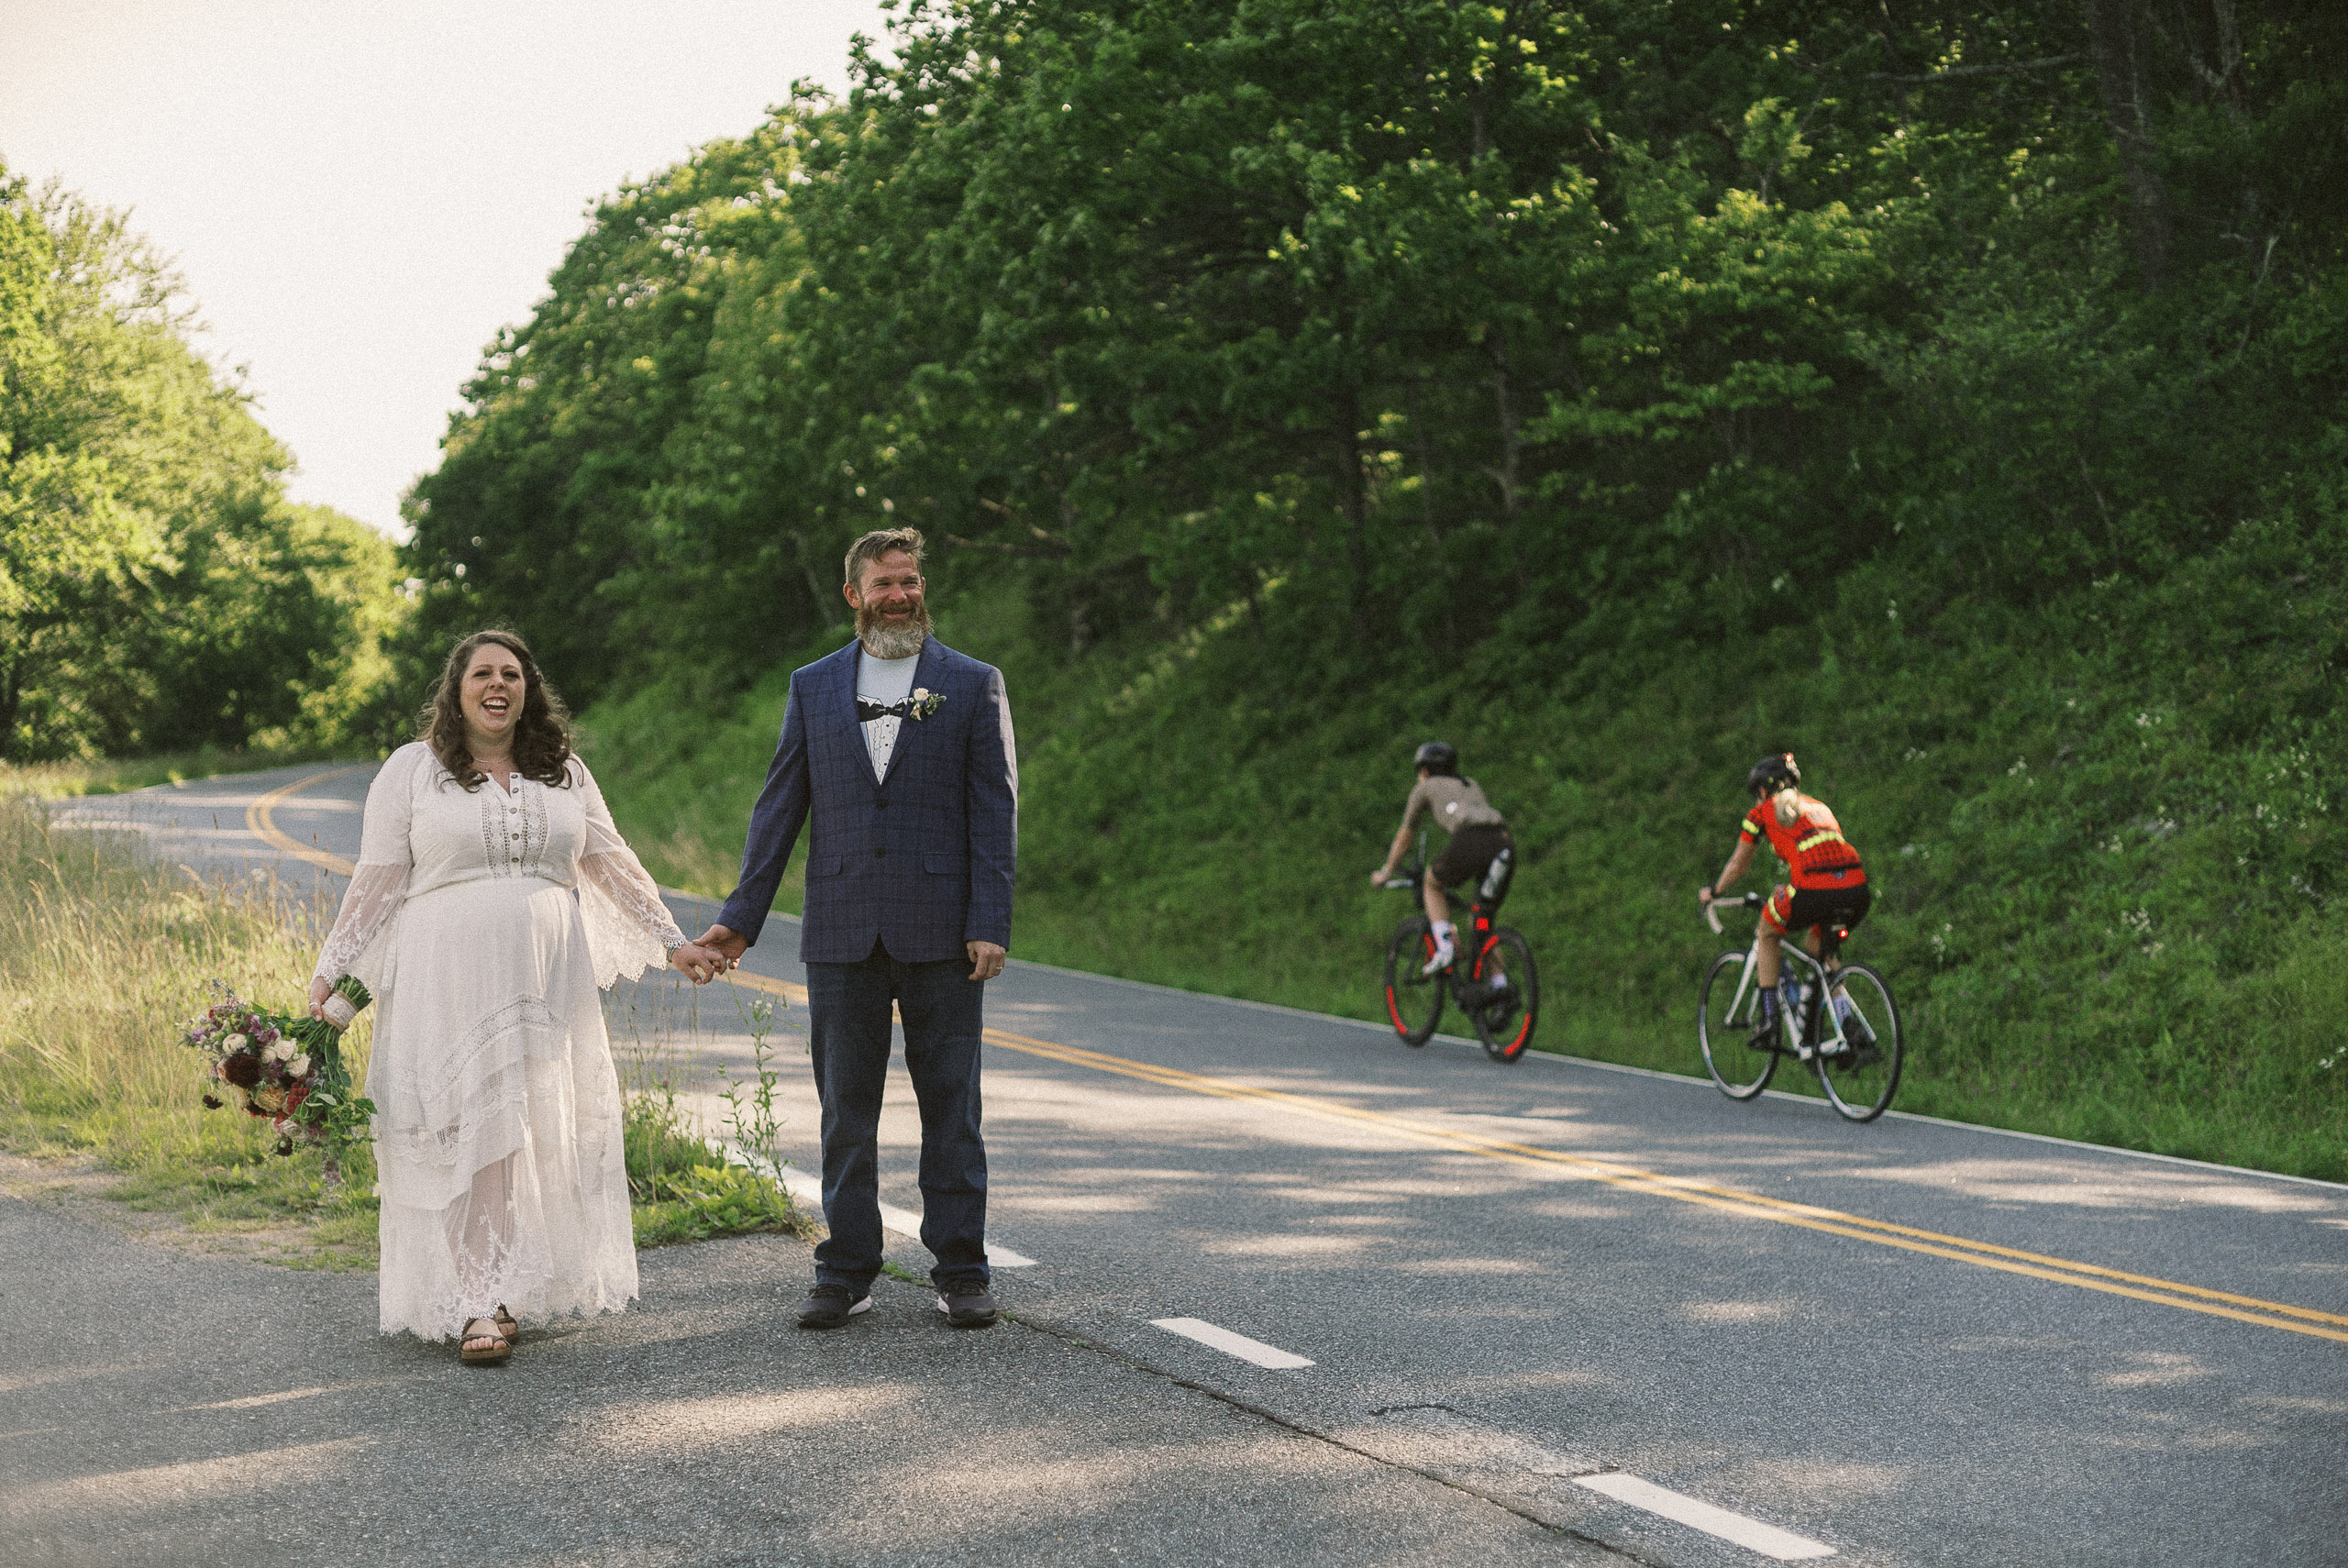 bride and groom environmental wedding portrait along Skyline Drive in Shenandoah National Park - captured by Virginia documentary wedding photographer - fujifilm classic wedding photo